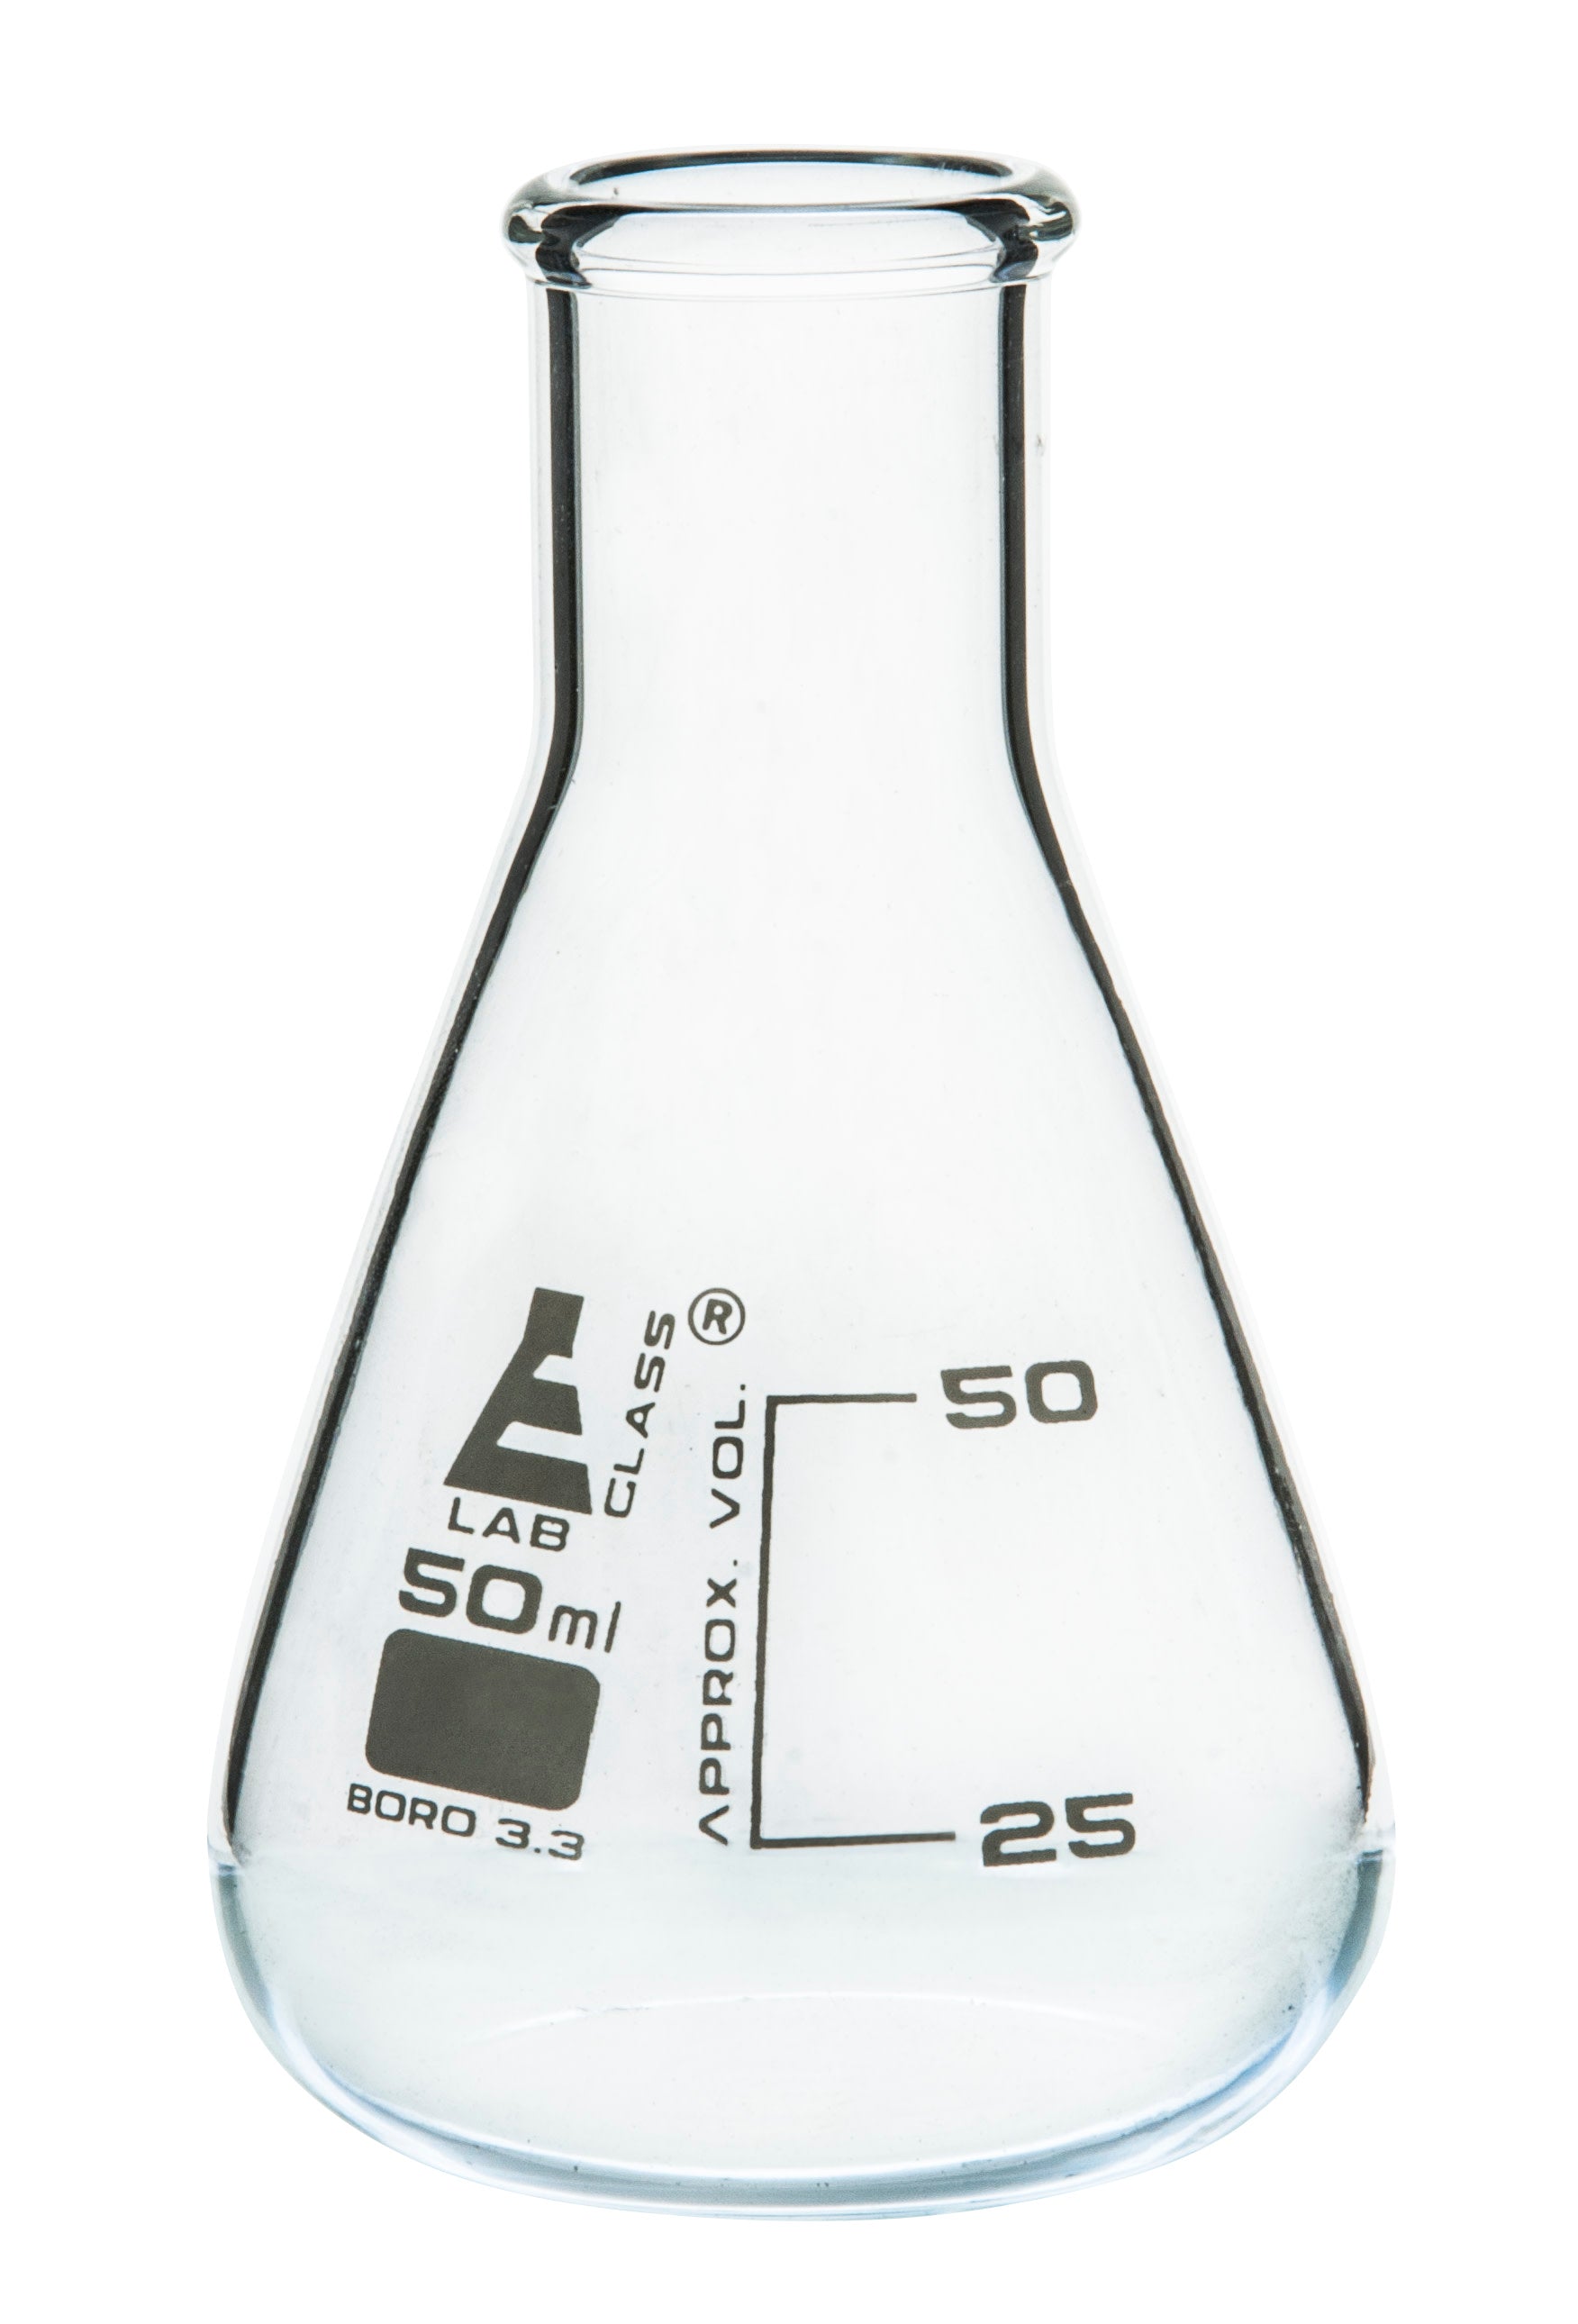 Borosilicate Glass Erlenmeyer Flask, 50 ml, 25 ml Graduations, Autoclavable